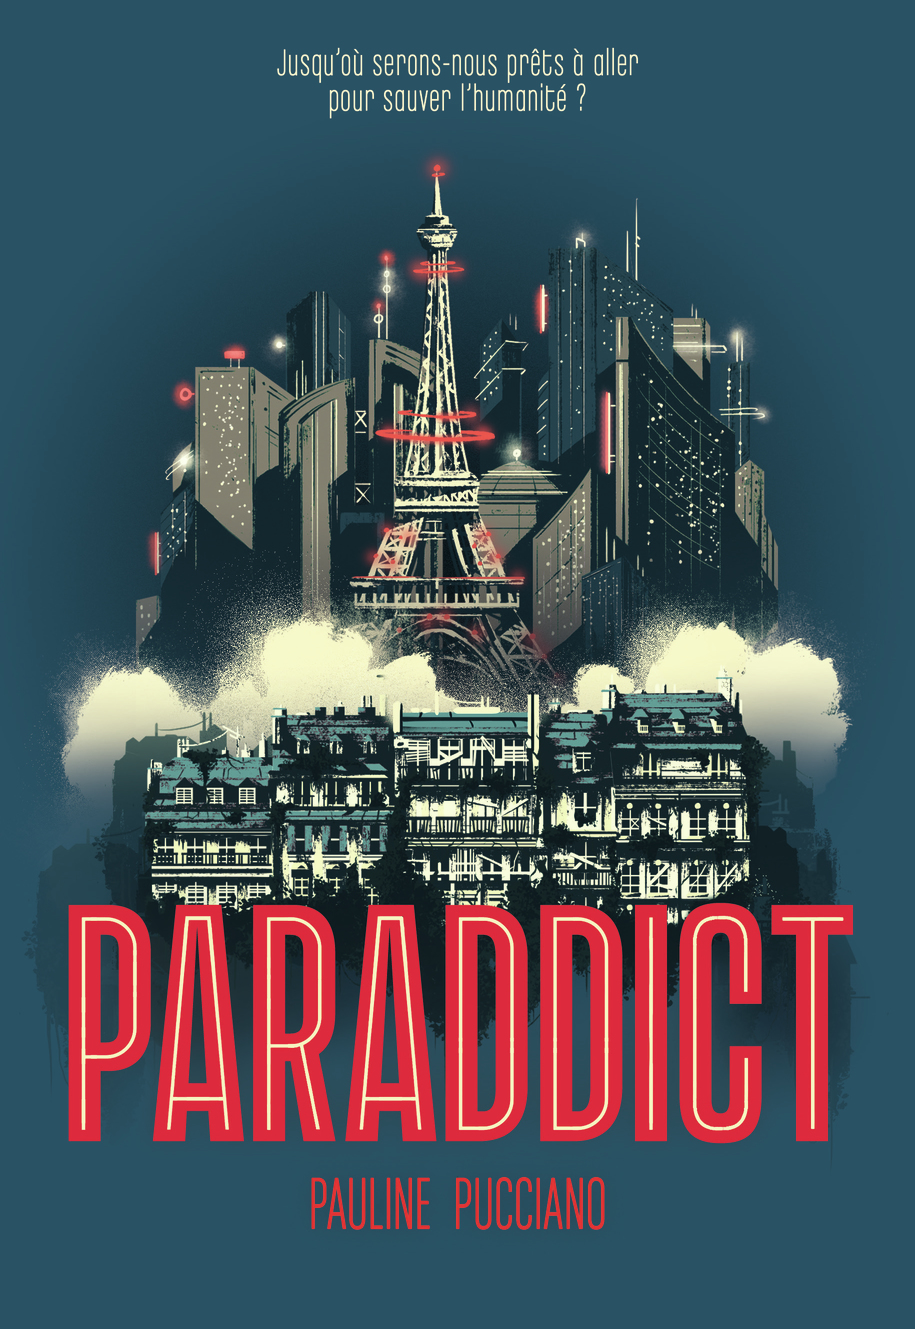 Afficher "Paraddict"